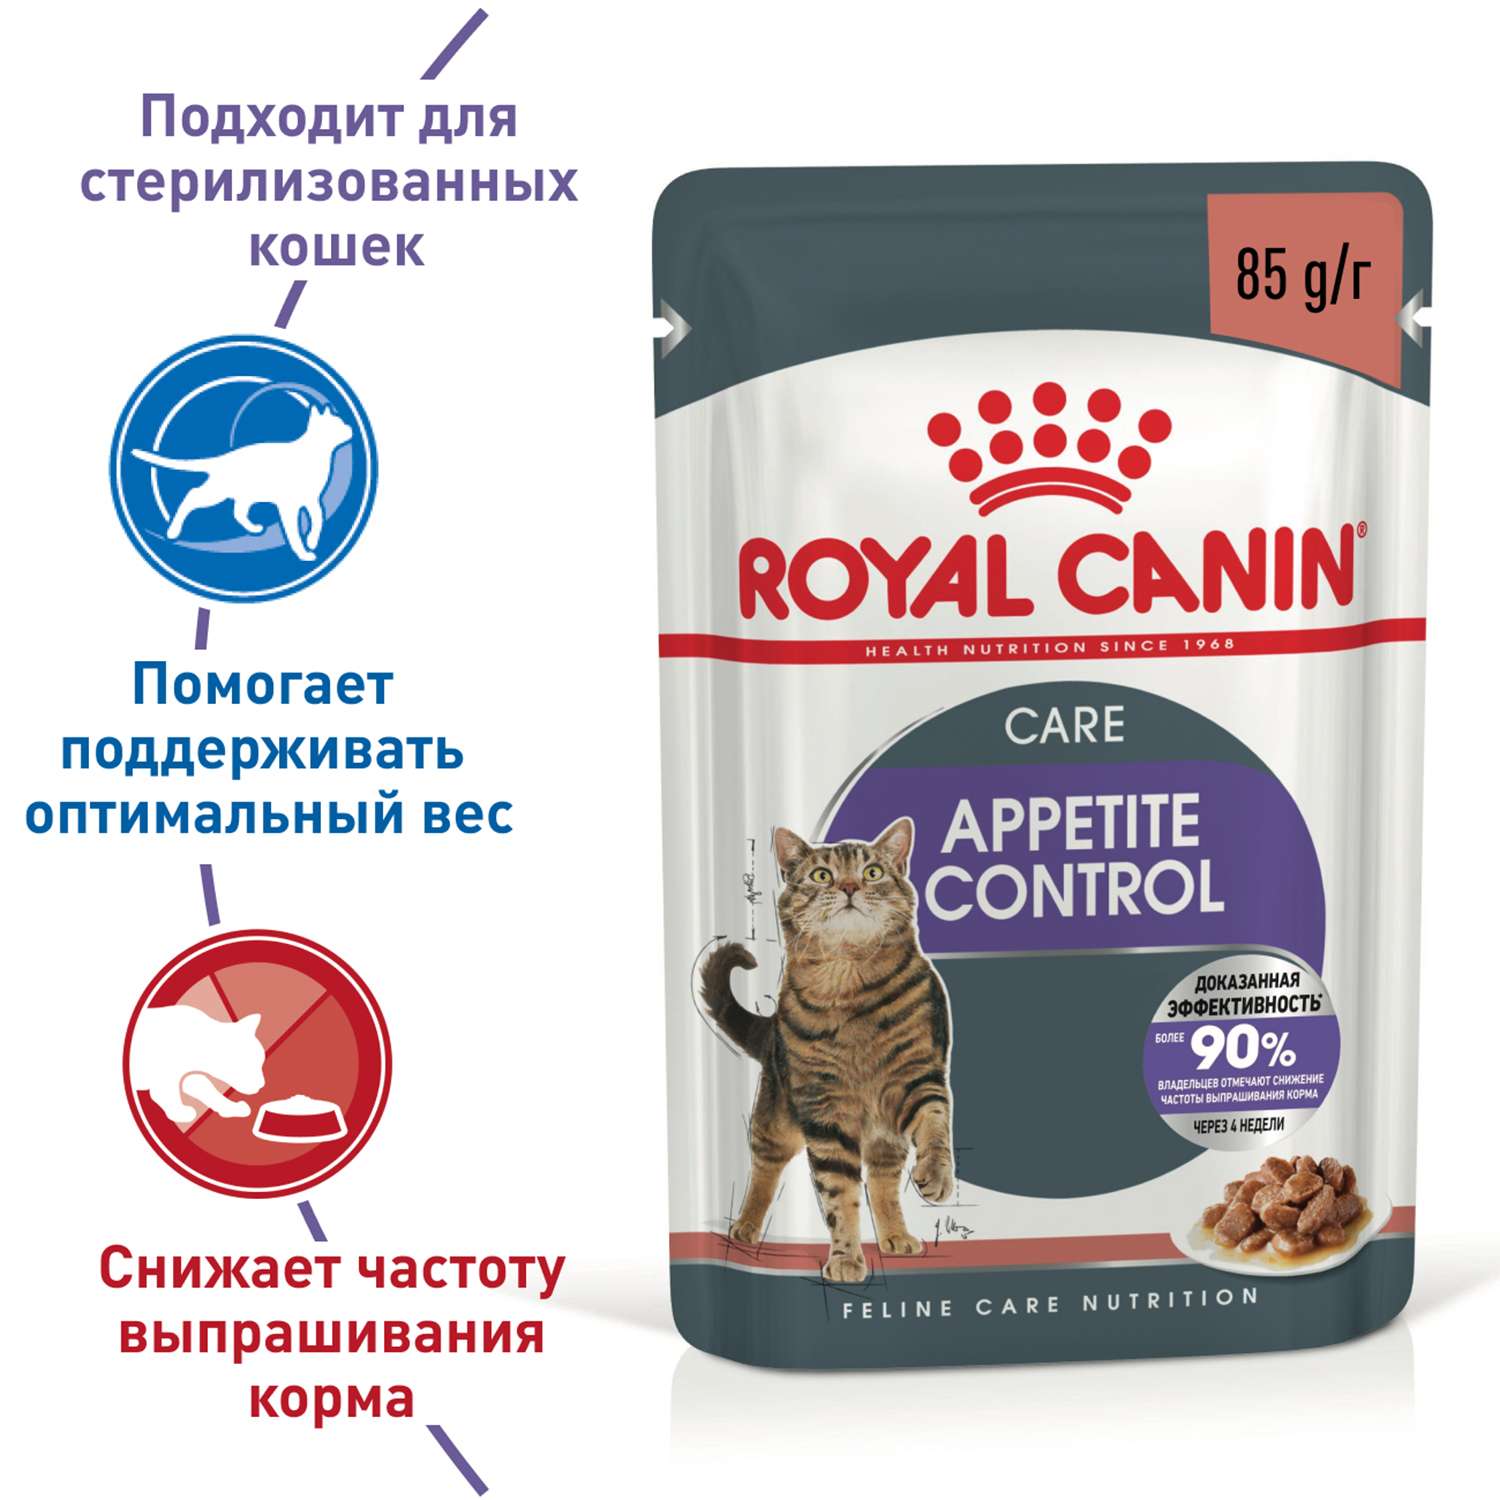 Корм для кошек ROYAL CANIN Appetite Control Care для контроля выпрашивания корма соус пауч 85г - фото 1